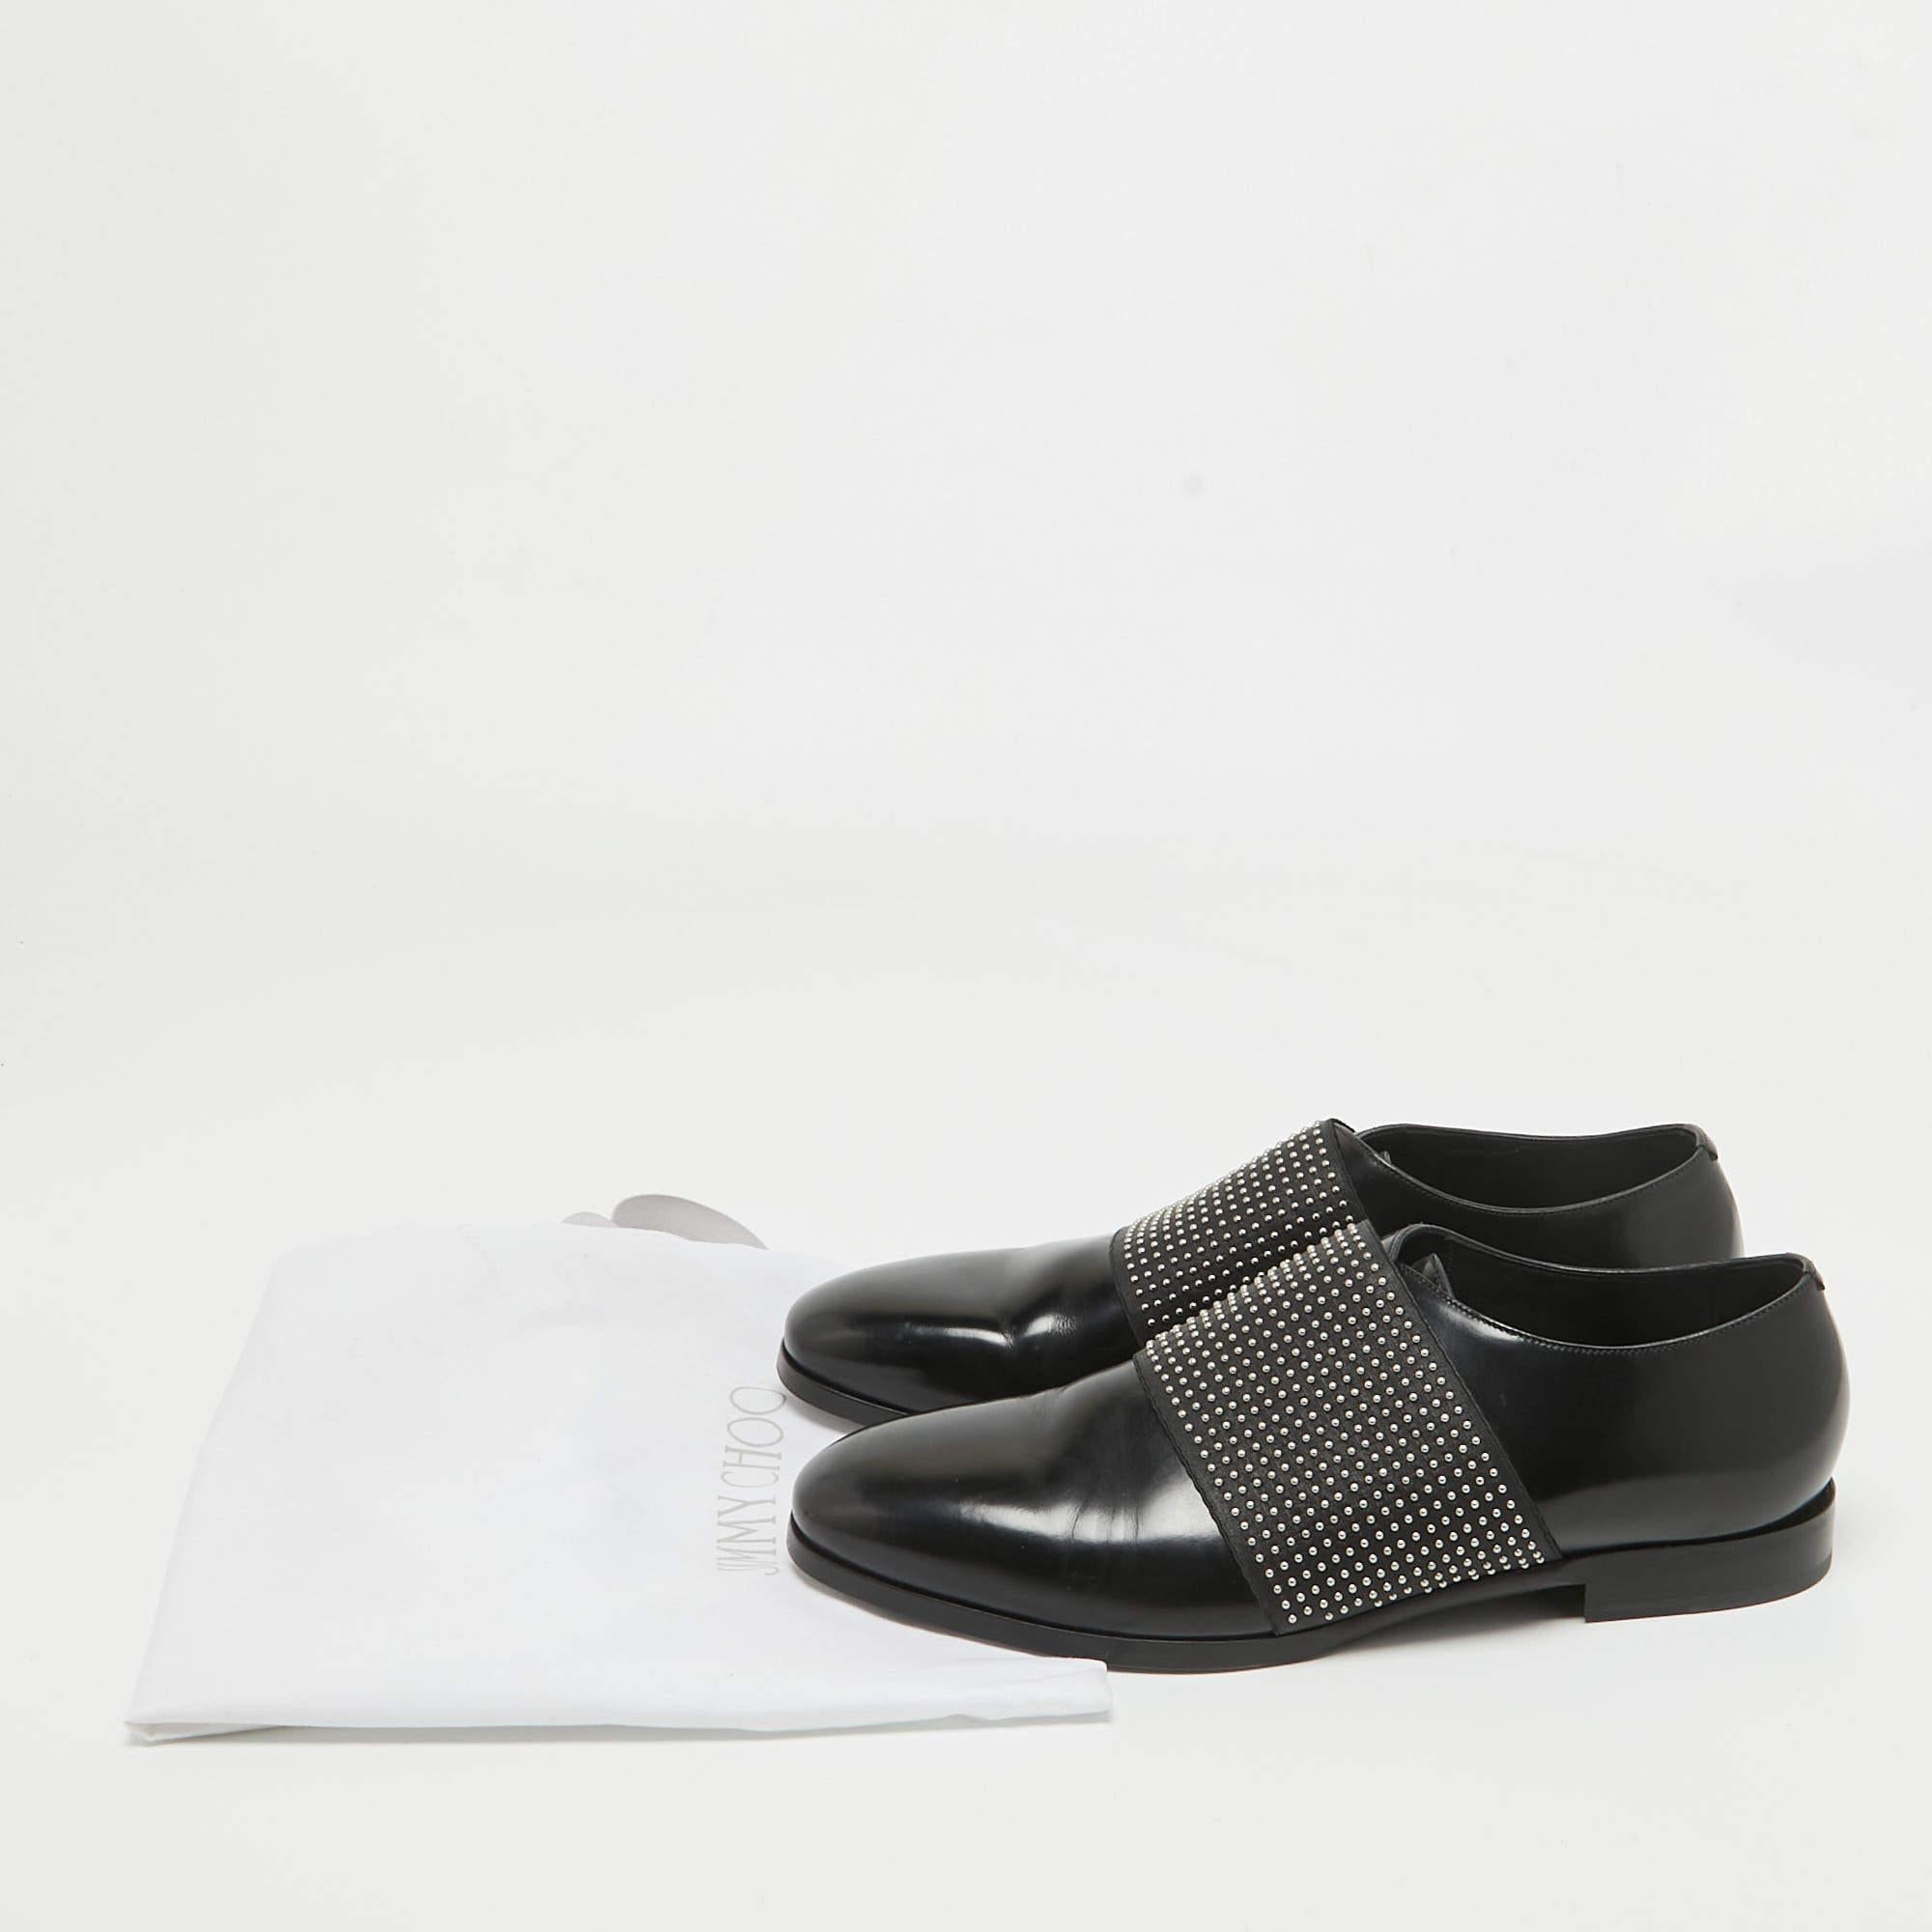 Jimmy Choo Black Leather Embellished Slip On Loafers Size 42 For Sale 4